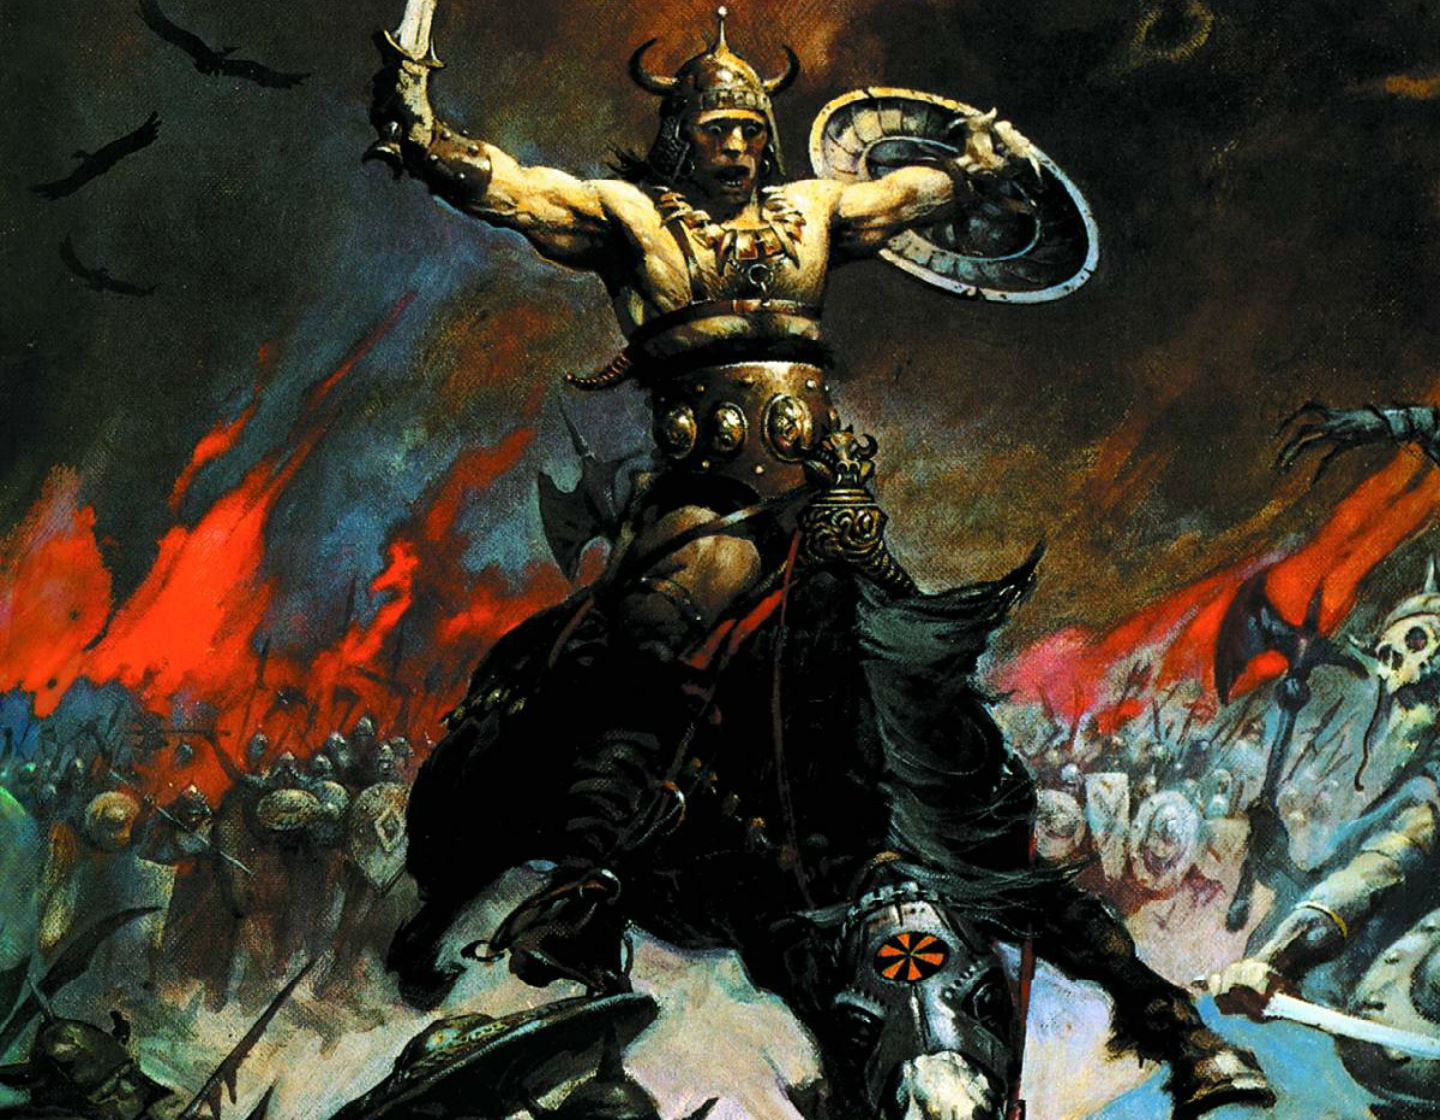 Conan the barbarian wallpaper | 1920x1080 | 269230 | WallpaperUP